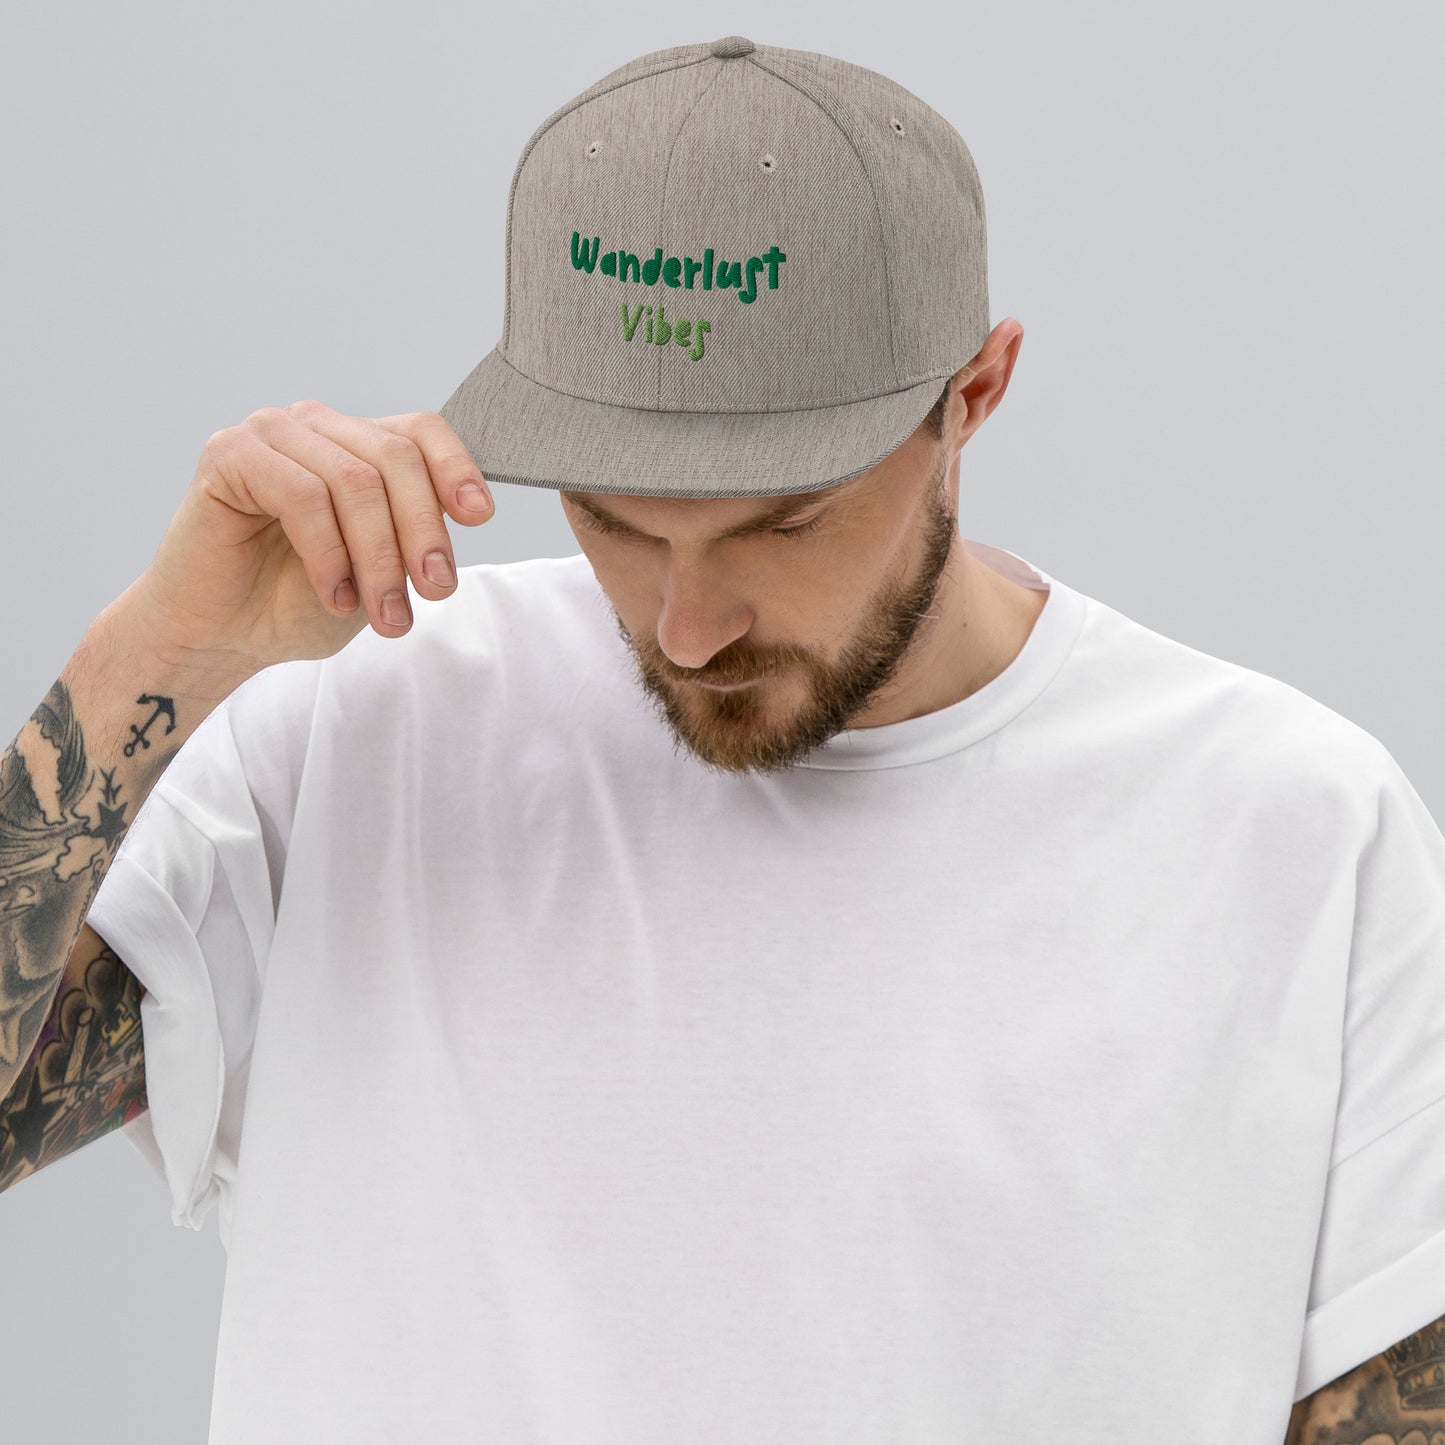 Wanderlust Vibes Snapback Hat: Abraza tu espíritu aventurero con estilo